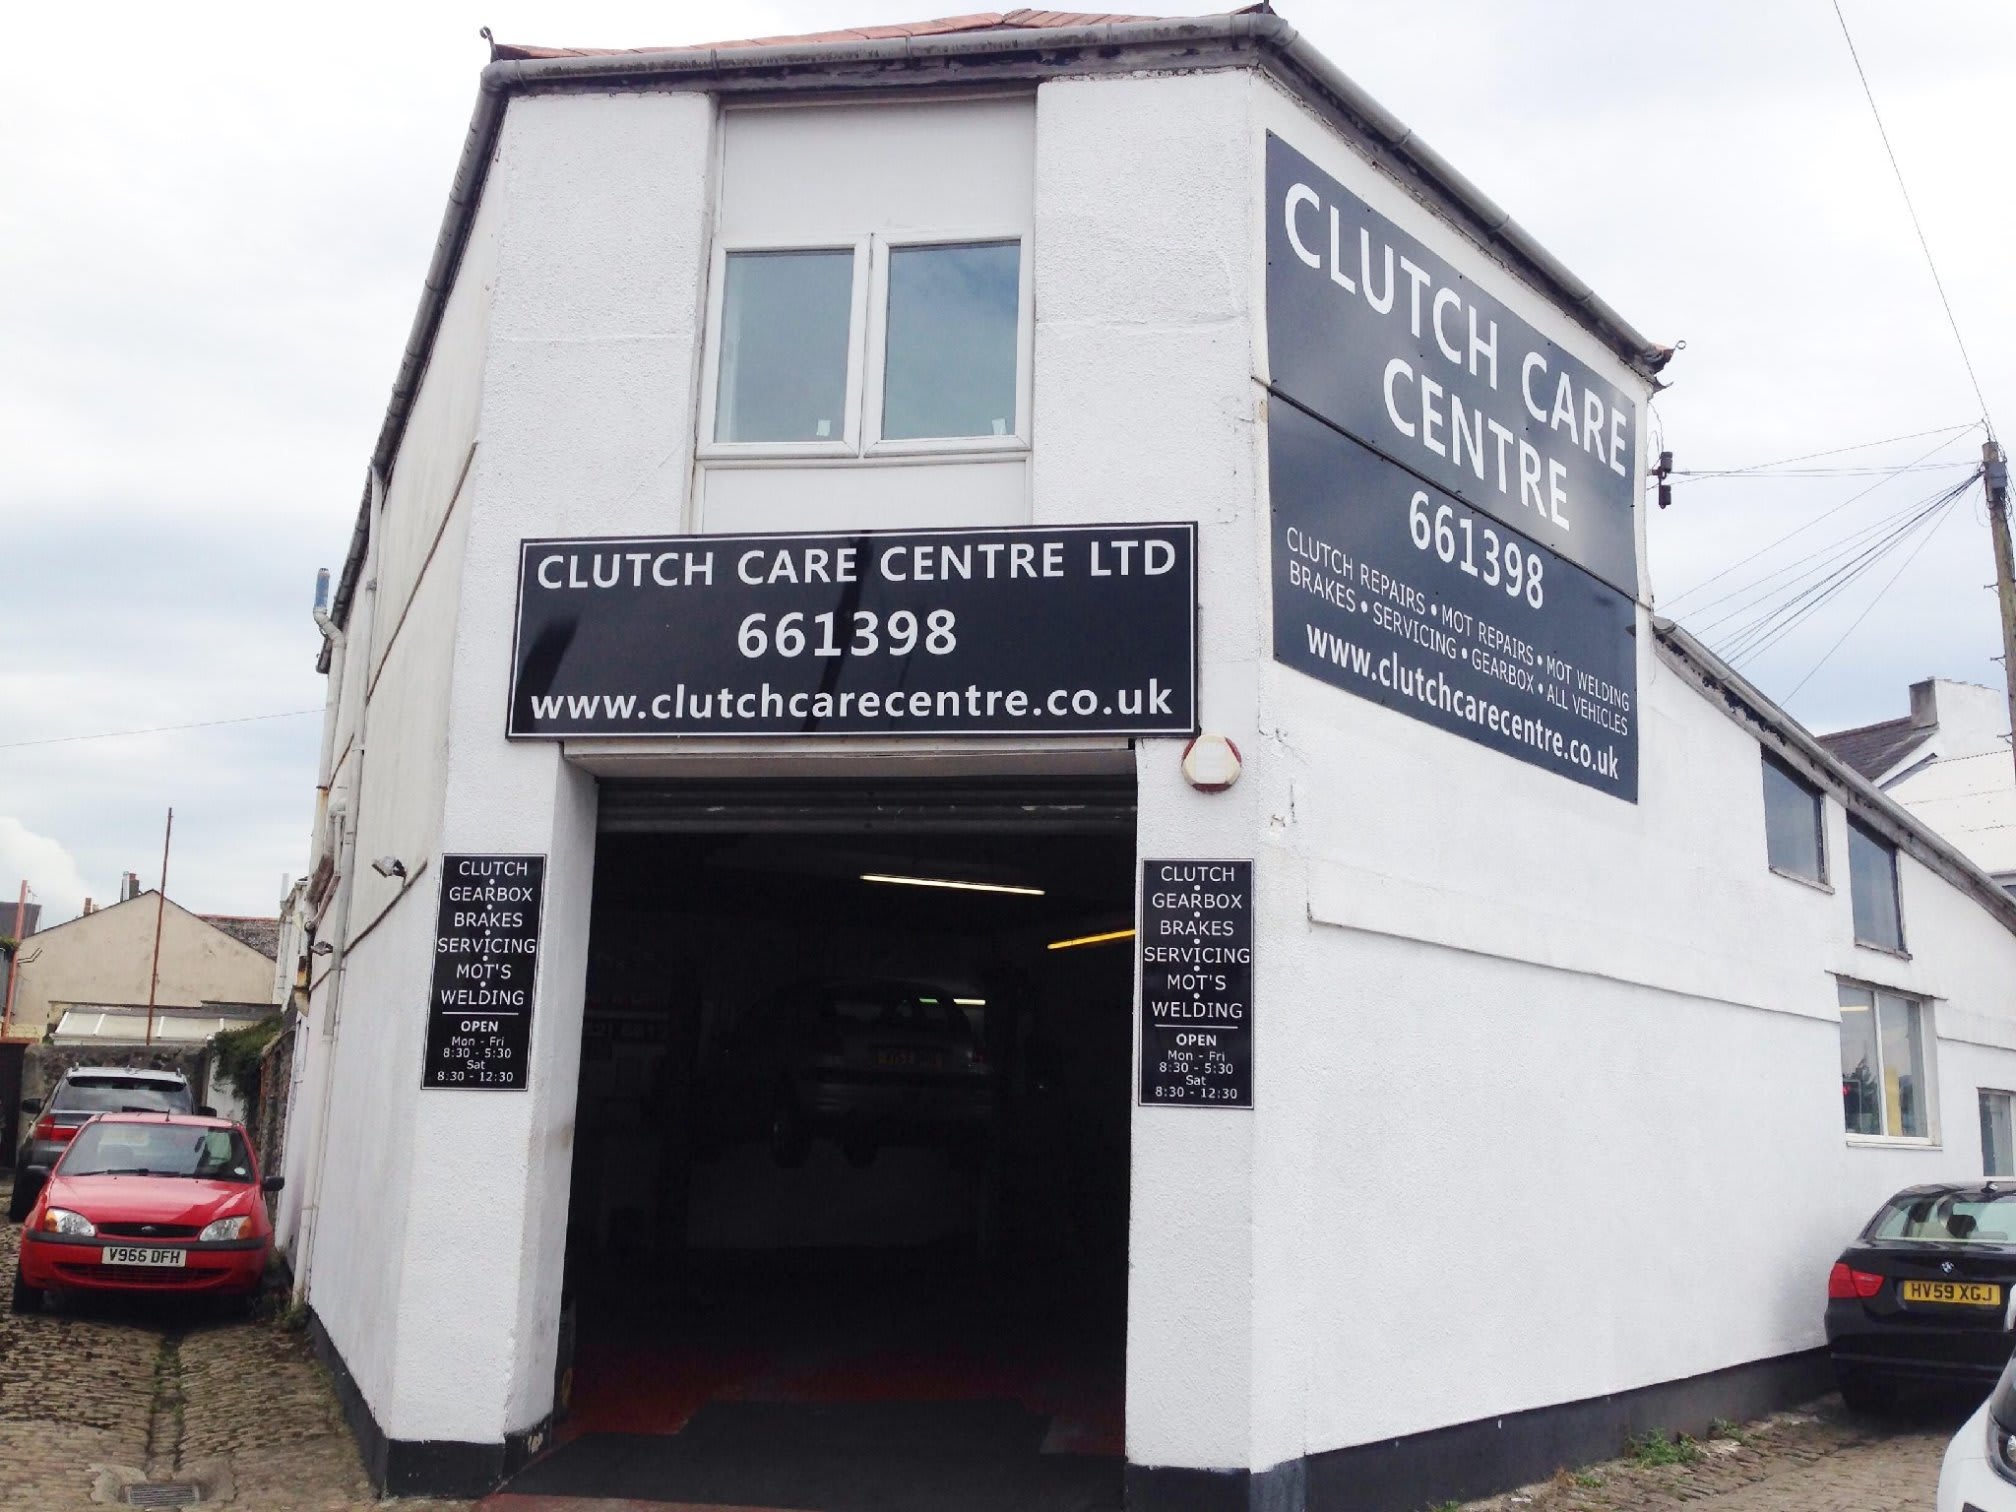 Clutch Care Centre Ltd Plymouth 01752 661398